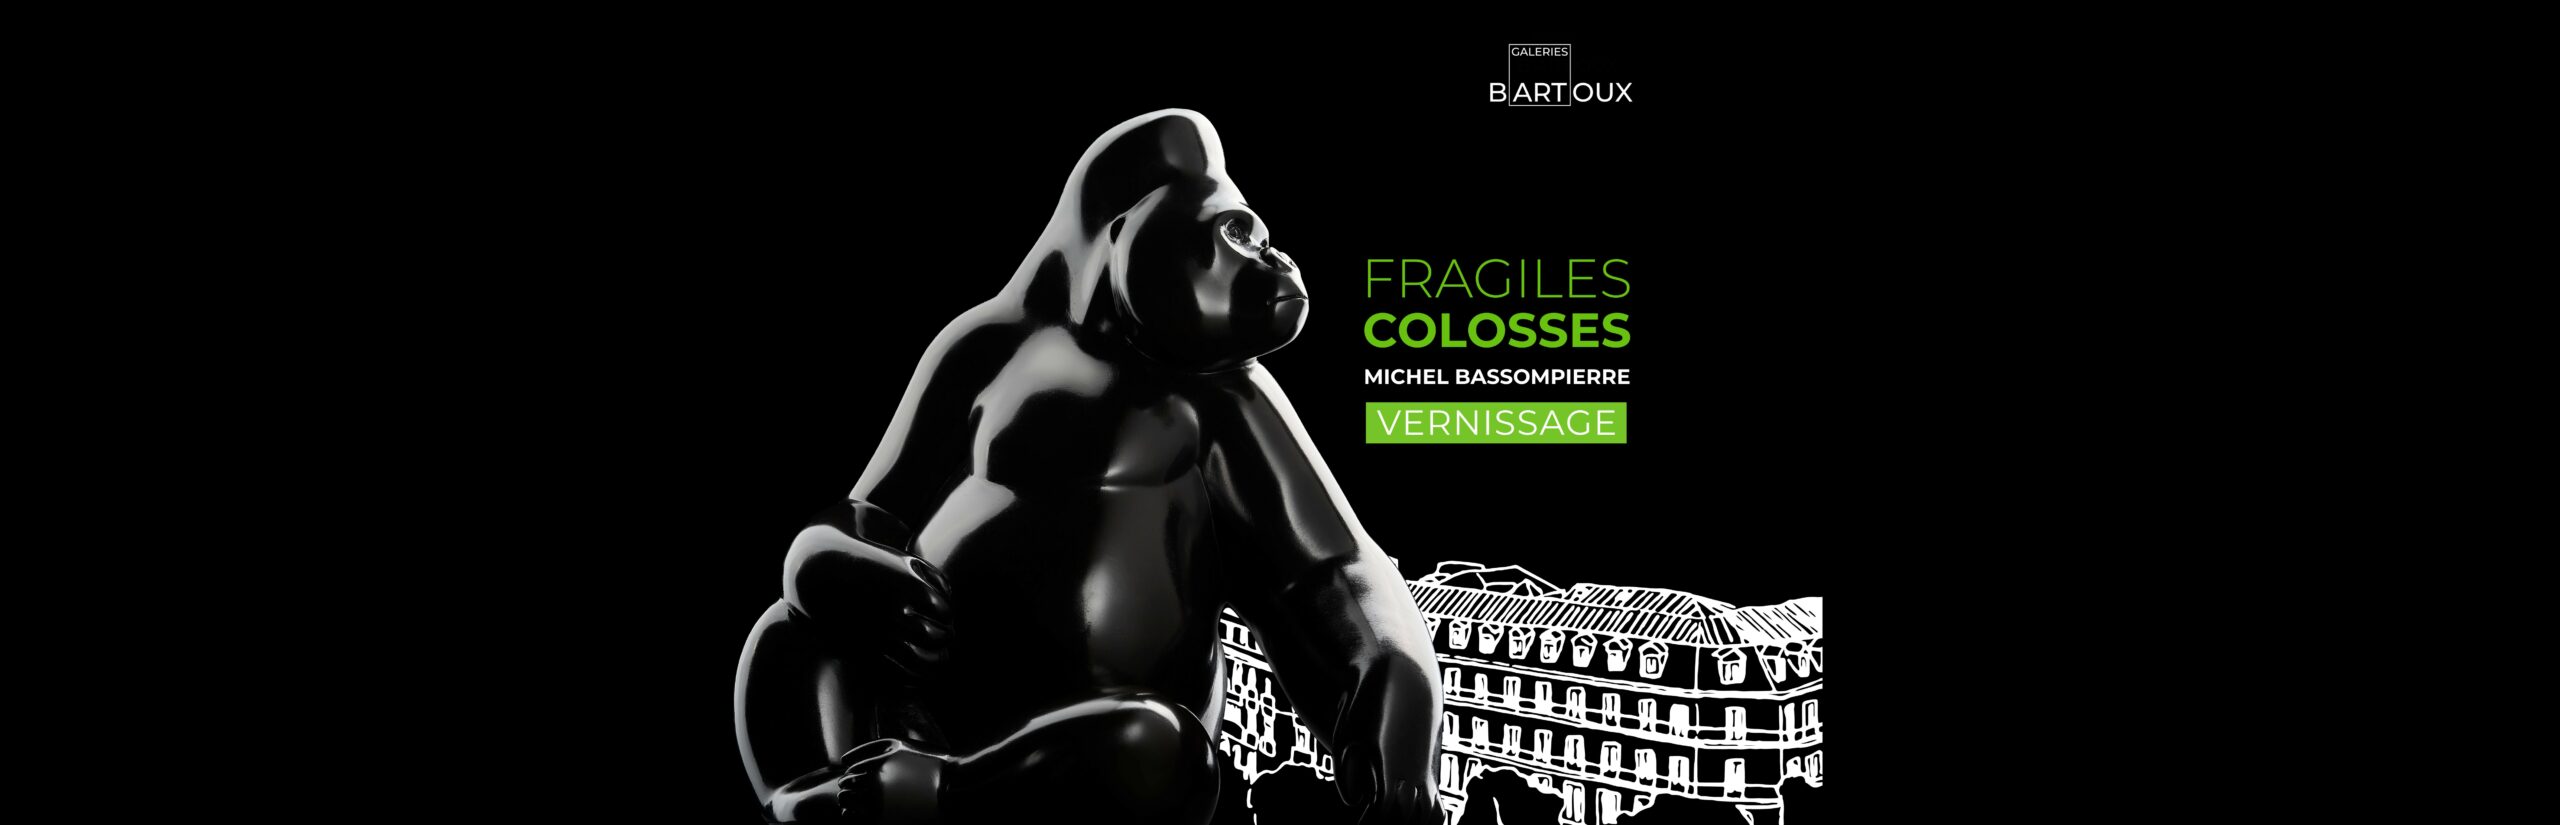 MICHEL BASSOMPIERRE – VERNISSAGE FRAGILES COLOSSES - Galeries Bartoux